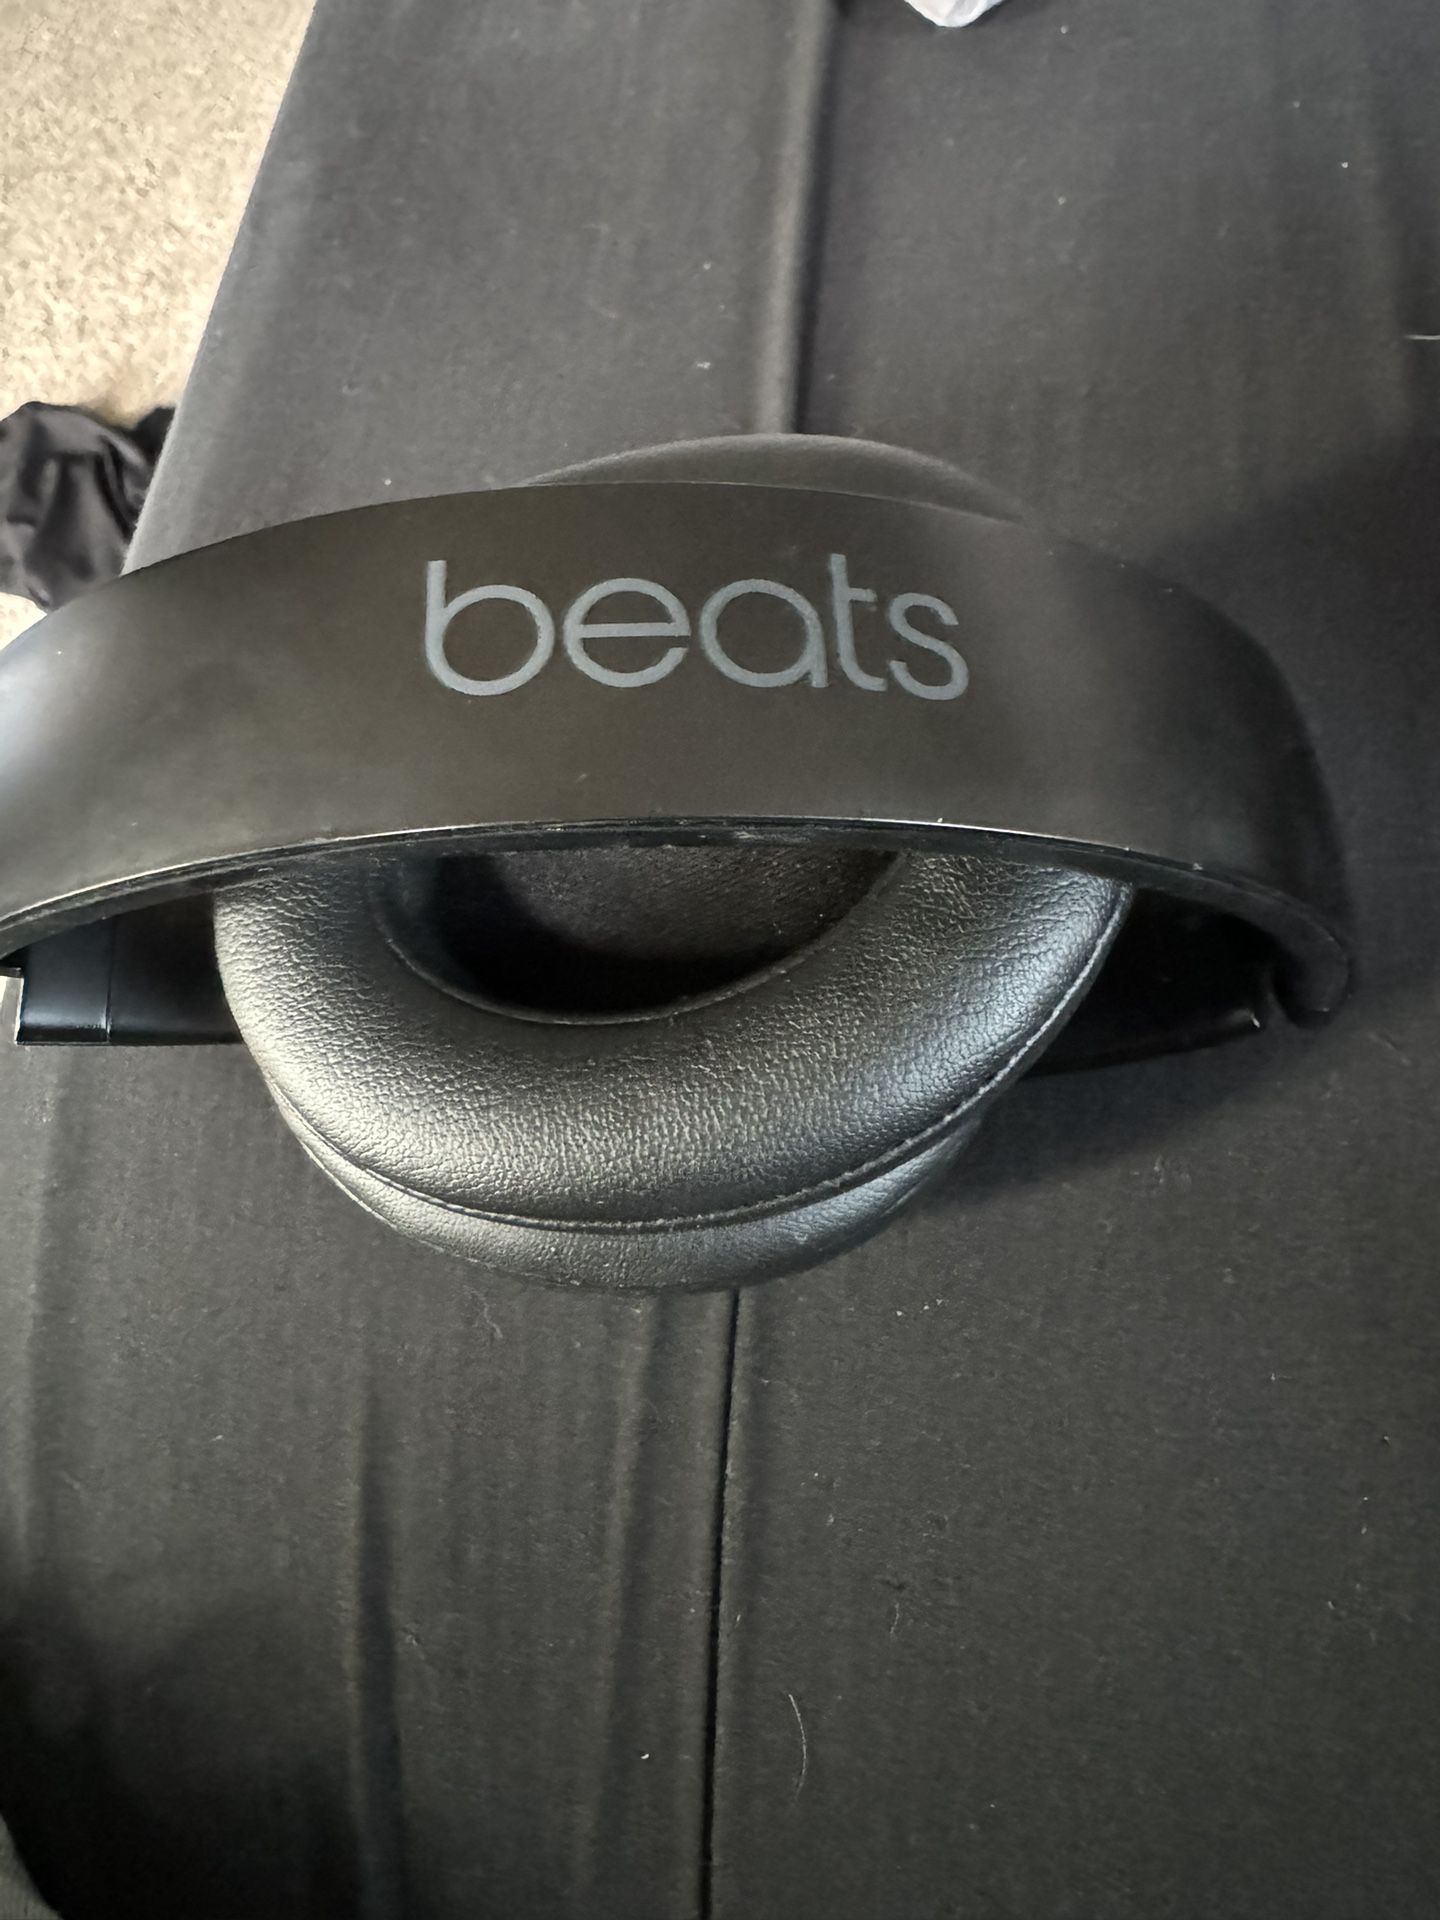 Beats studio 3s